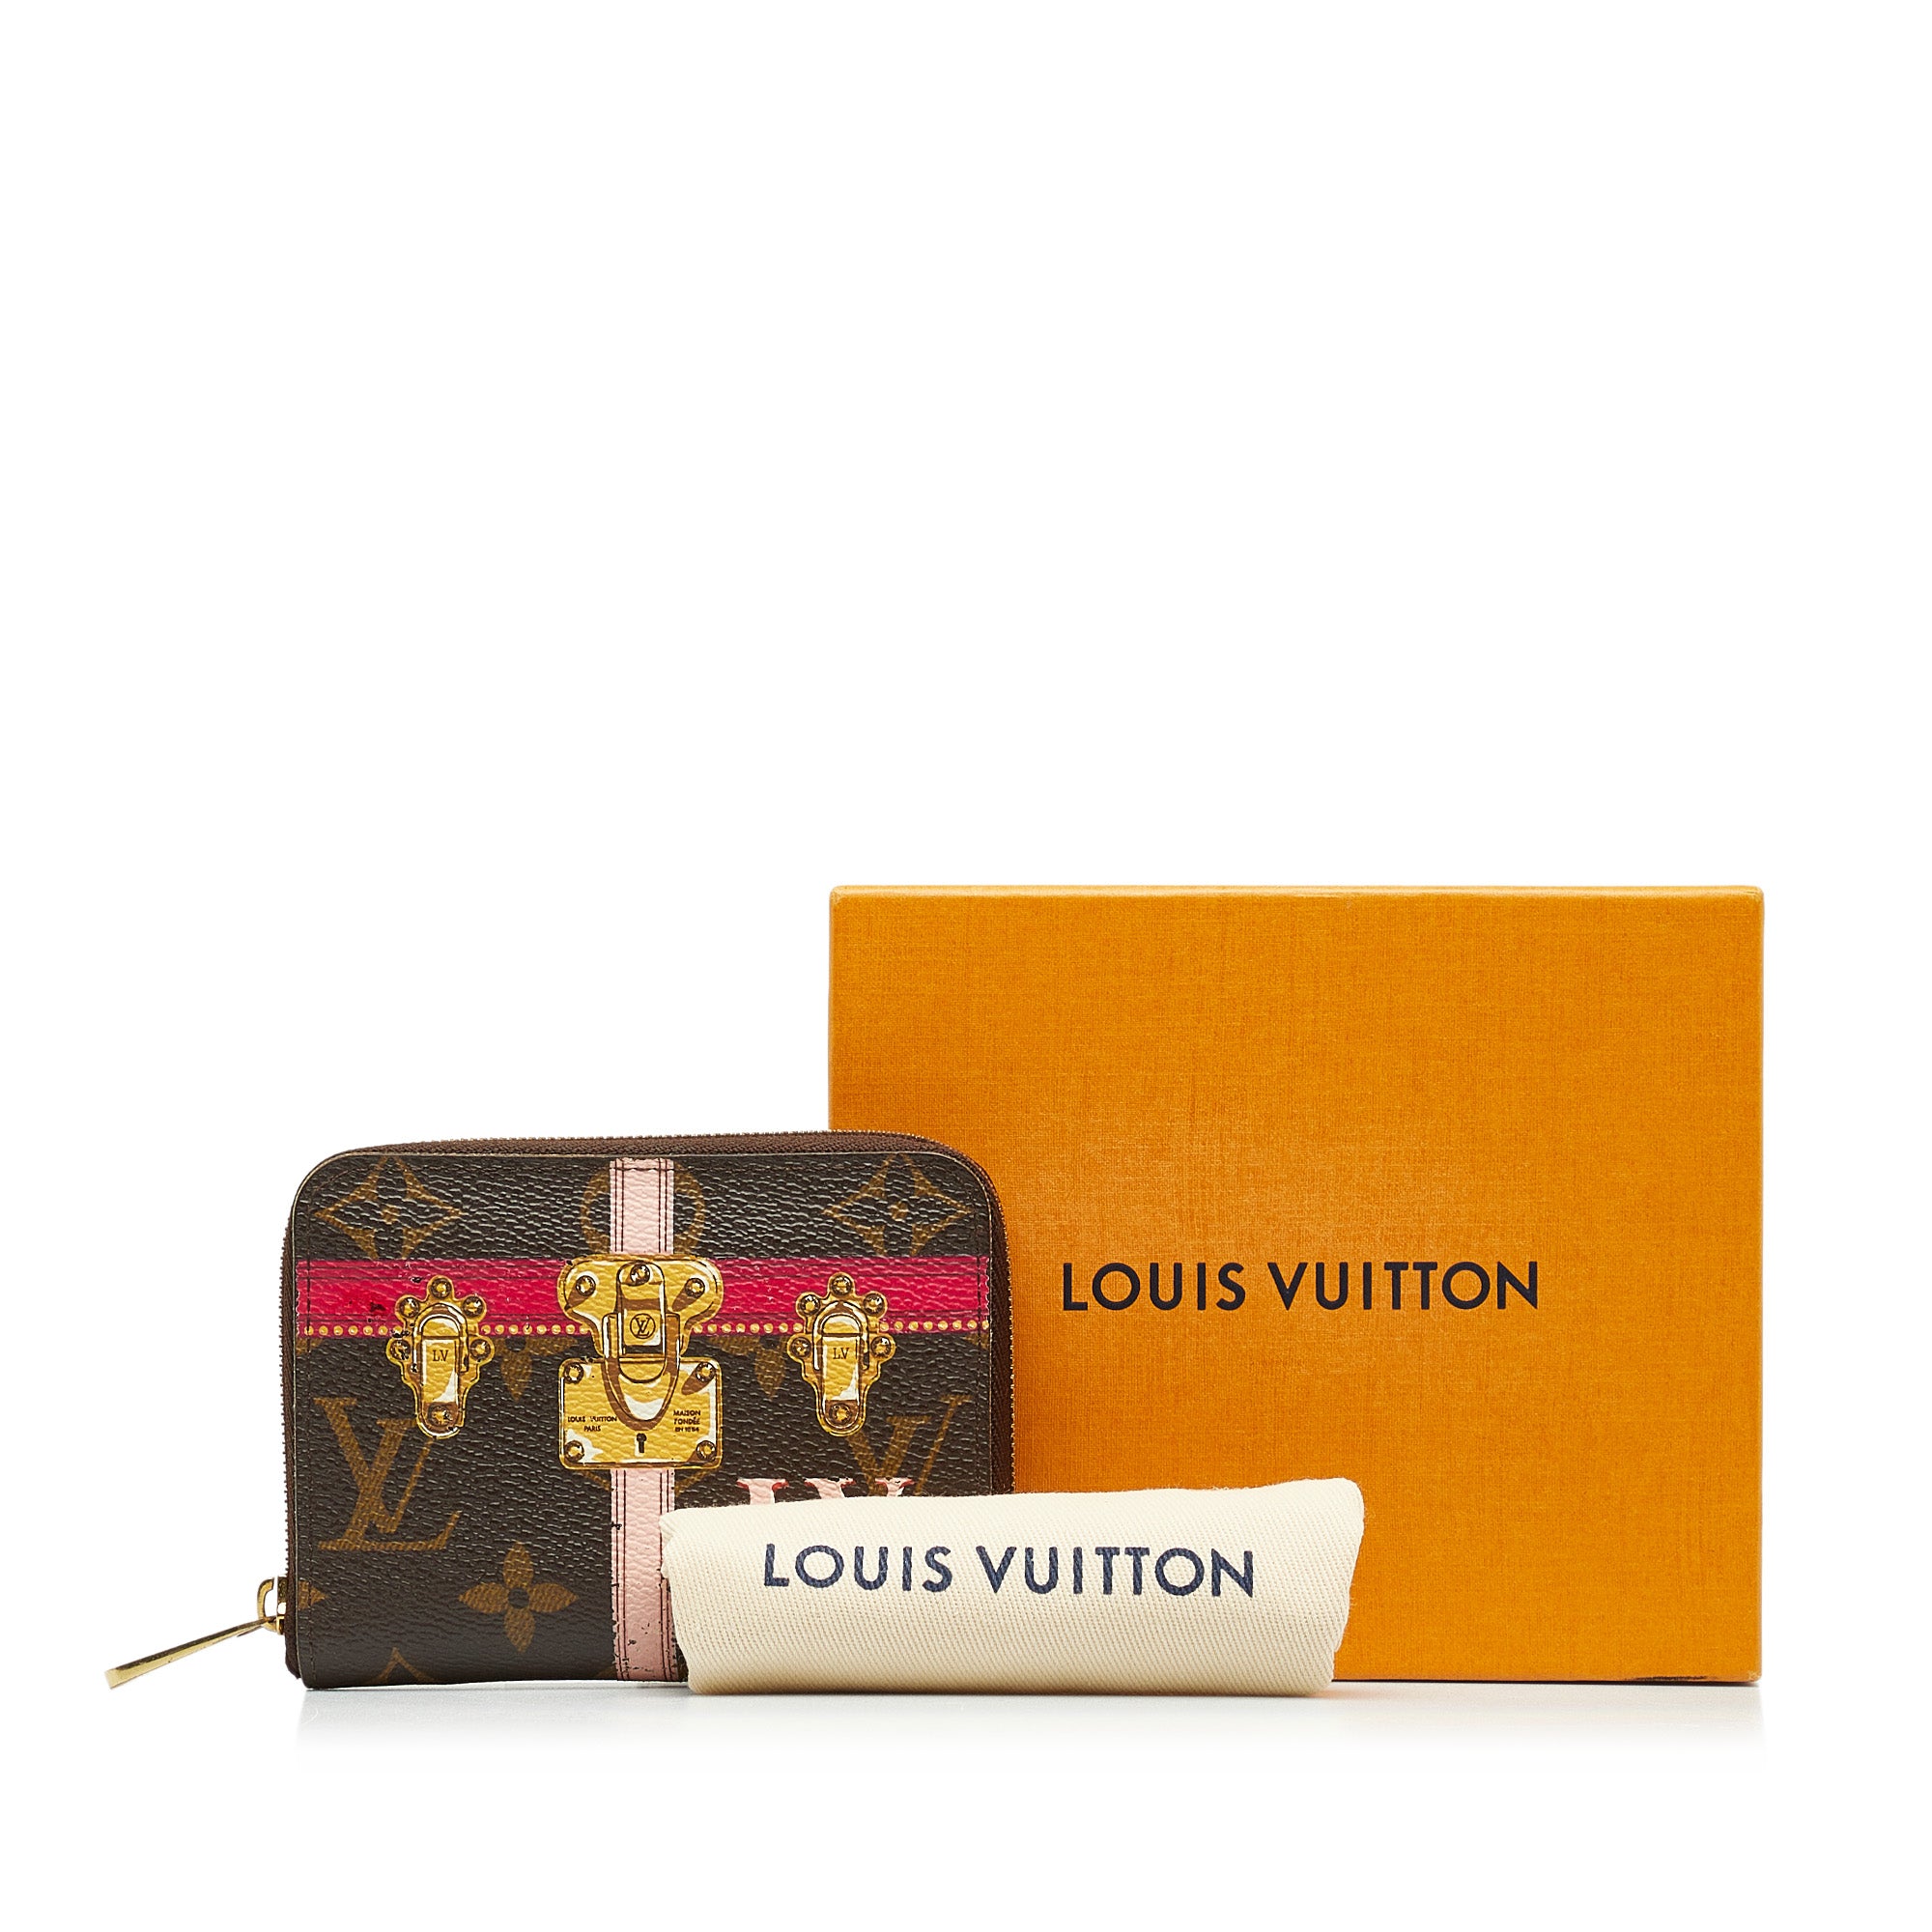 Authenticated Used Louis Vuitton Monogram Eclipse Zippy Wallet